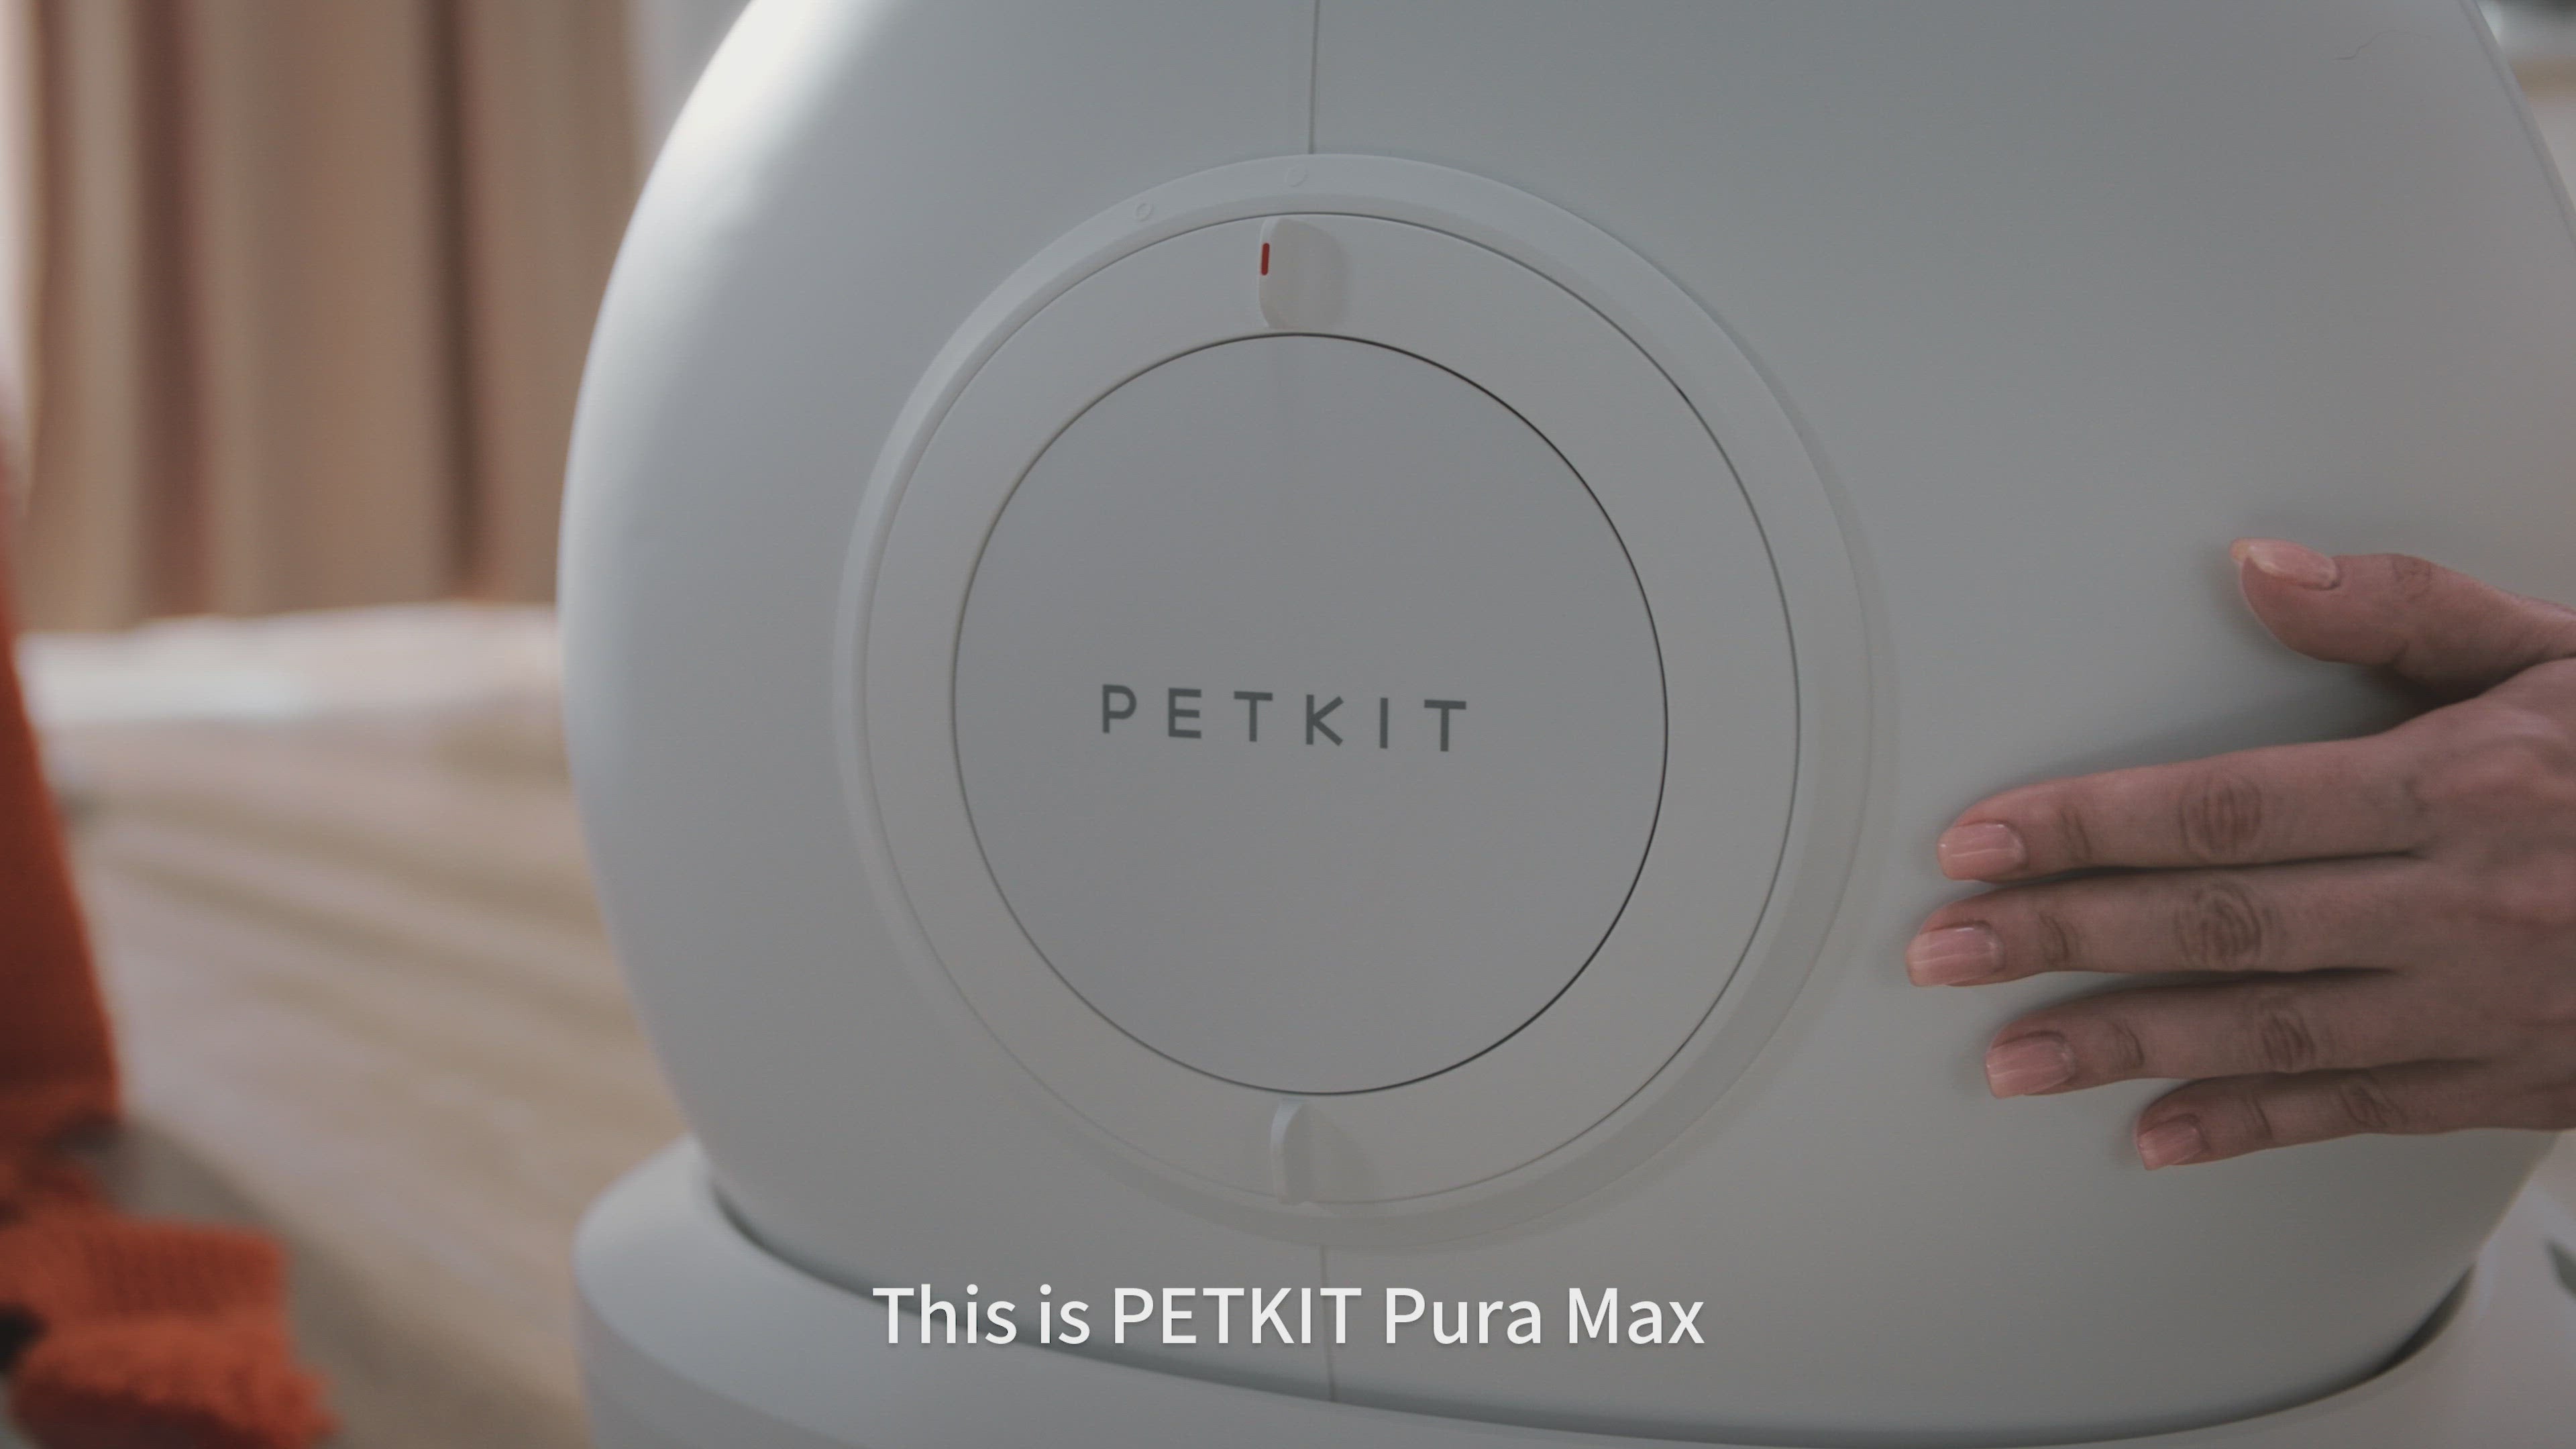 Pura max stuck when cleaning : r/PETKIT